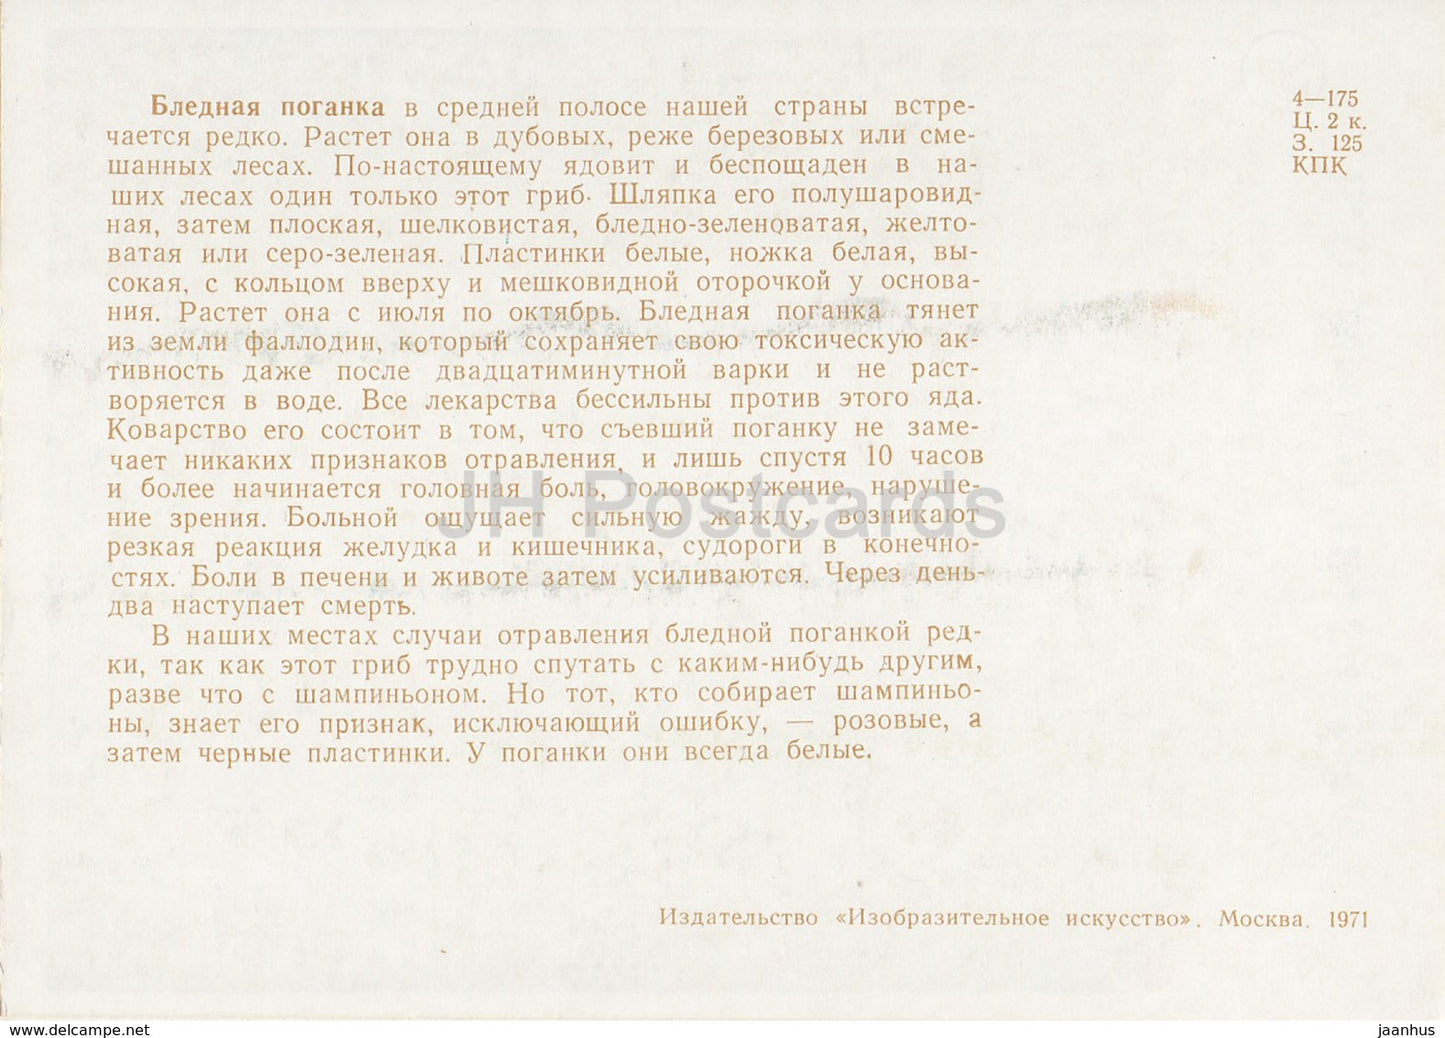 Knollenblätterpilz - Amanita phalloides - Pilze - Illustration - 1971 - Russland UdSSR - unbenutzt